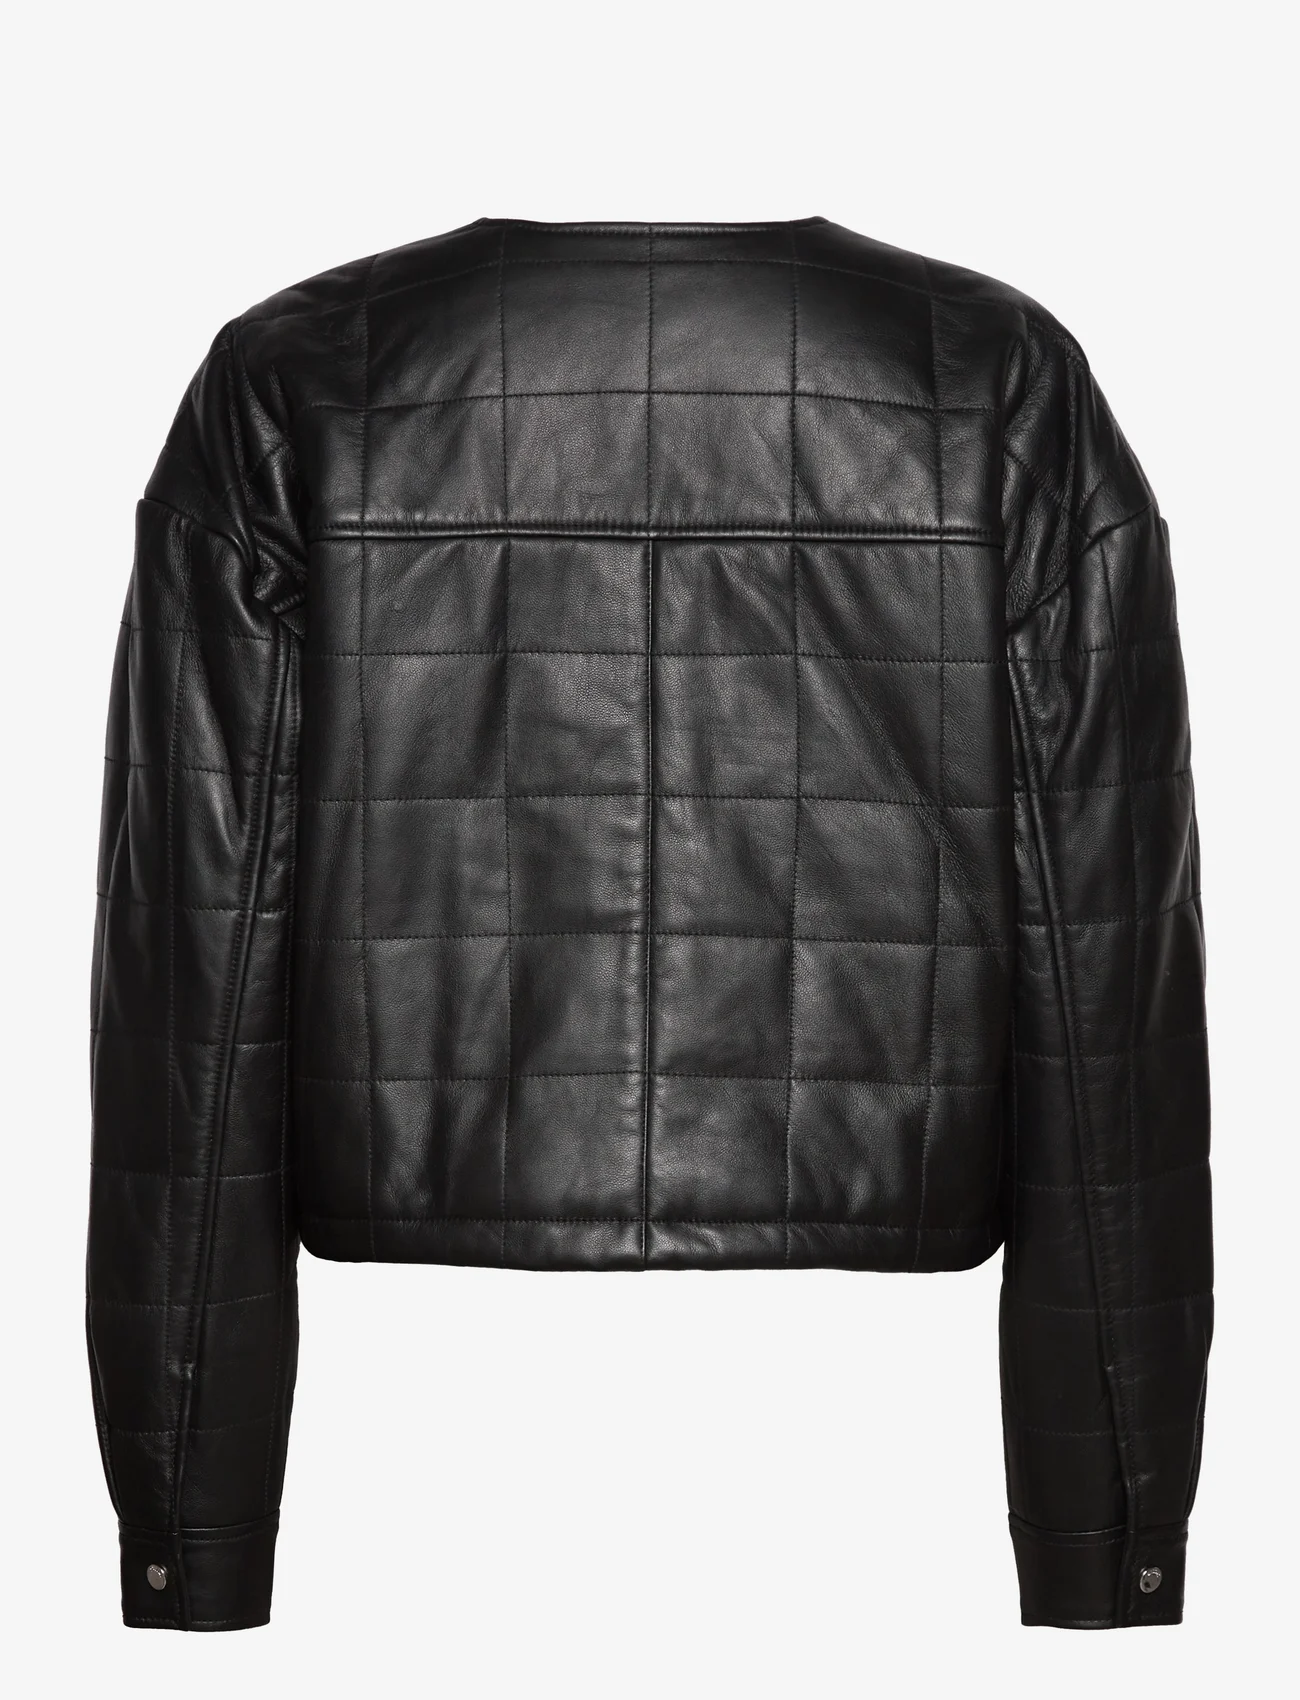 2NDDAY - 2ND Rajka - Refined Leather - spring jackets - deep black - 1